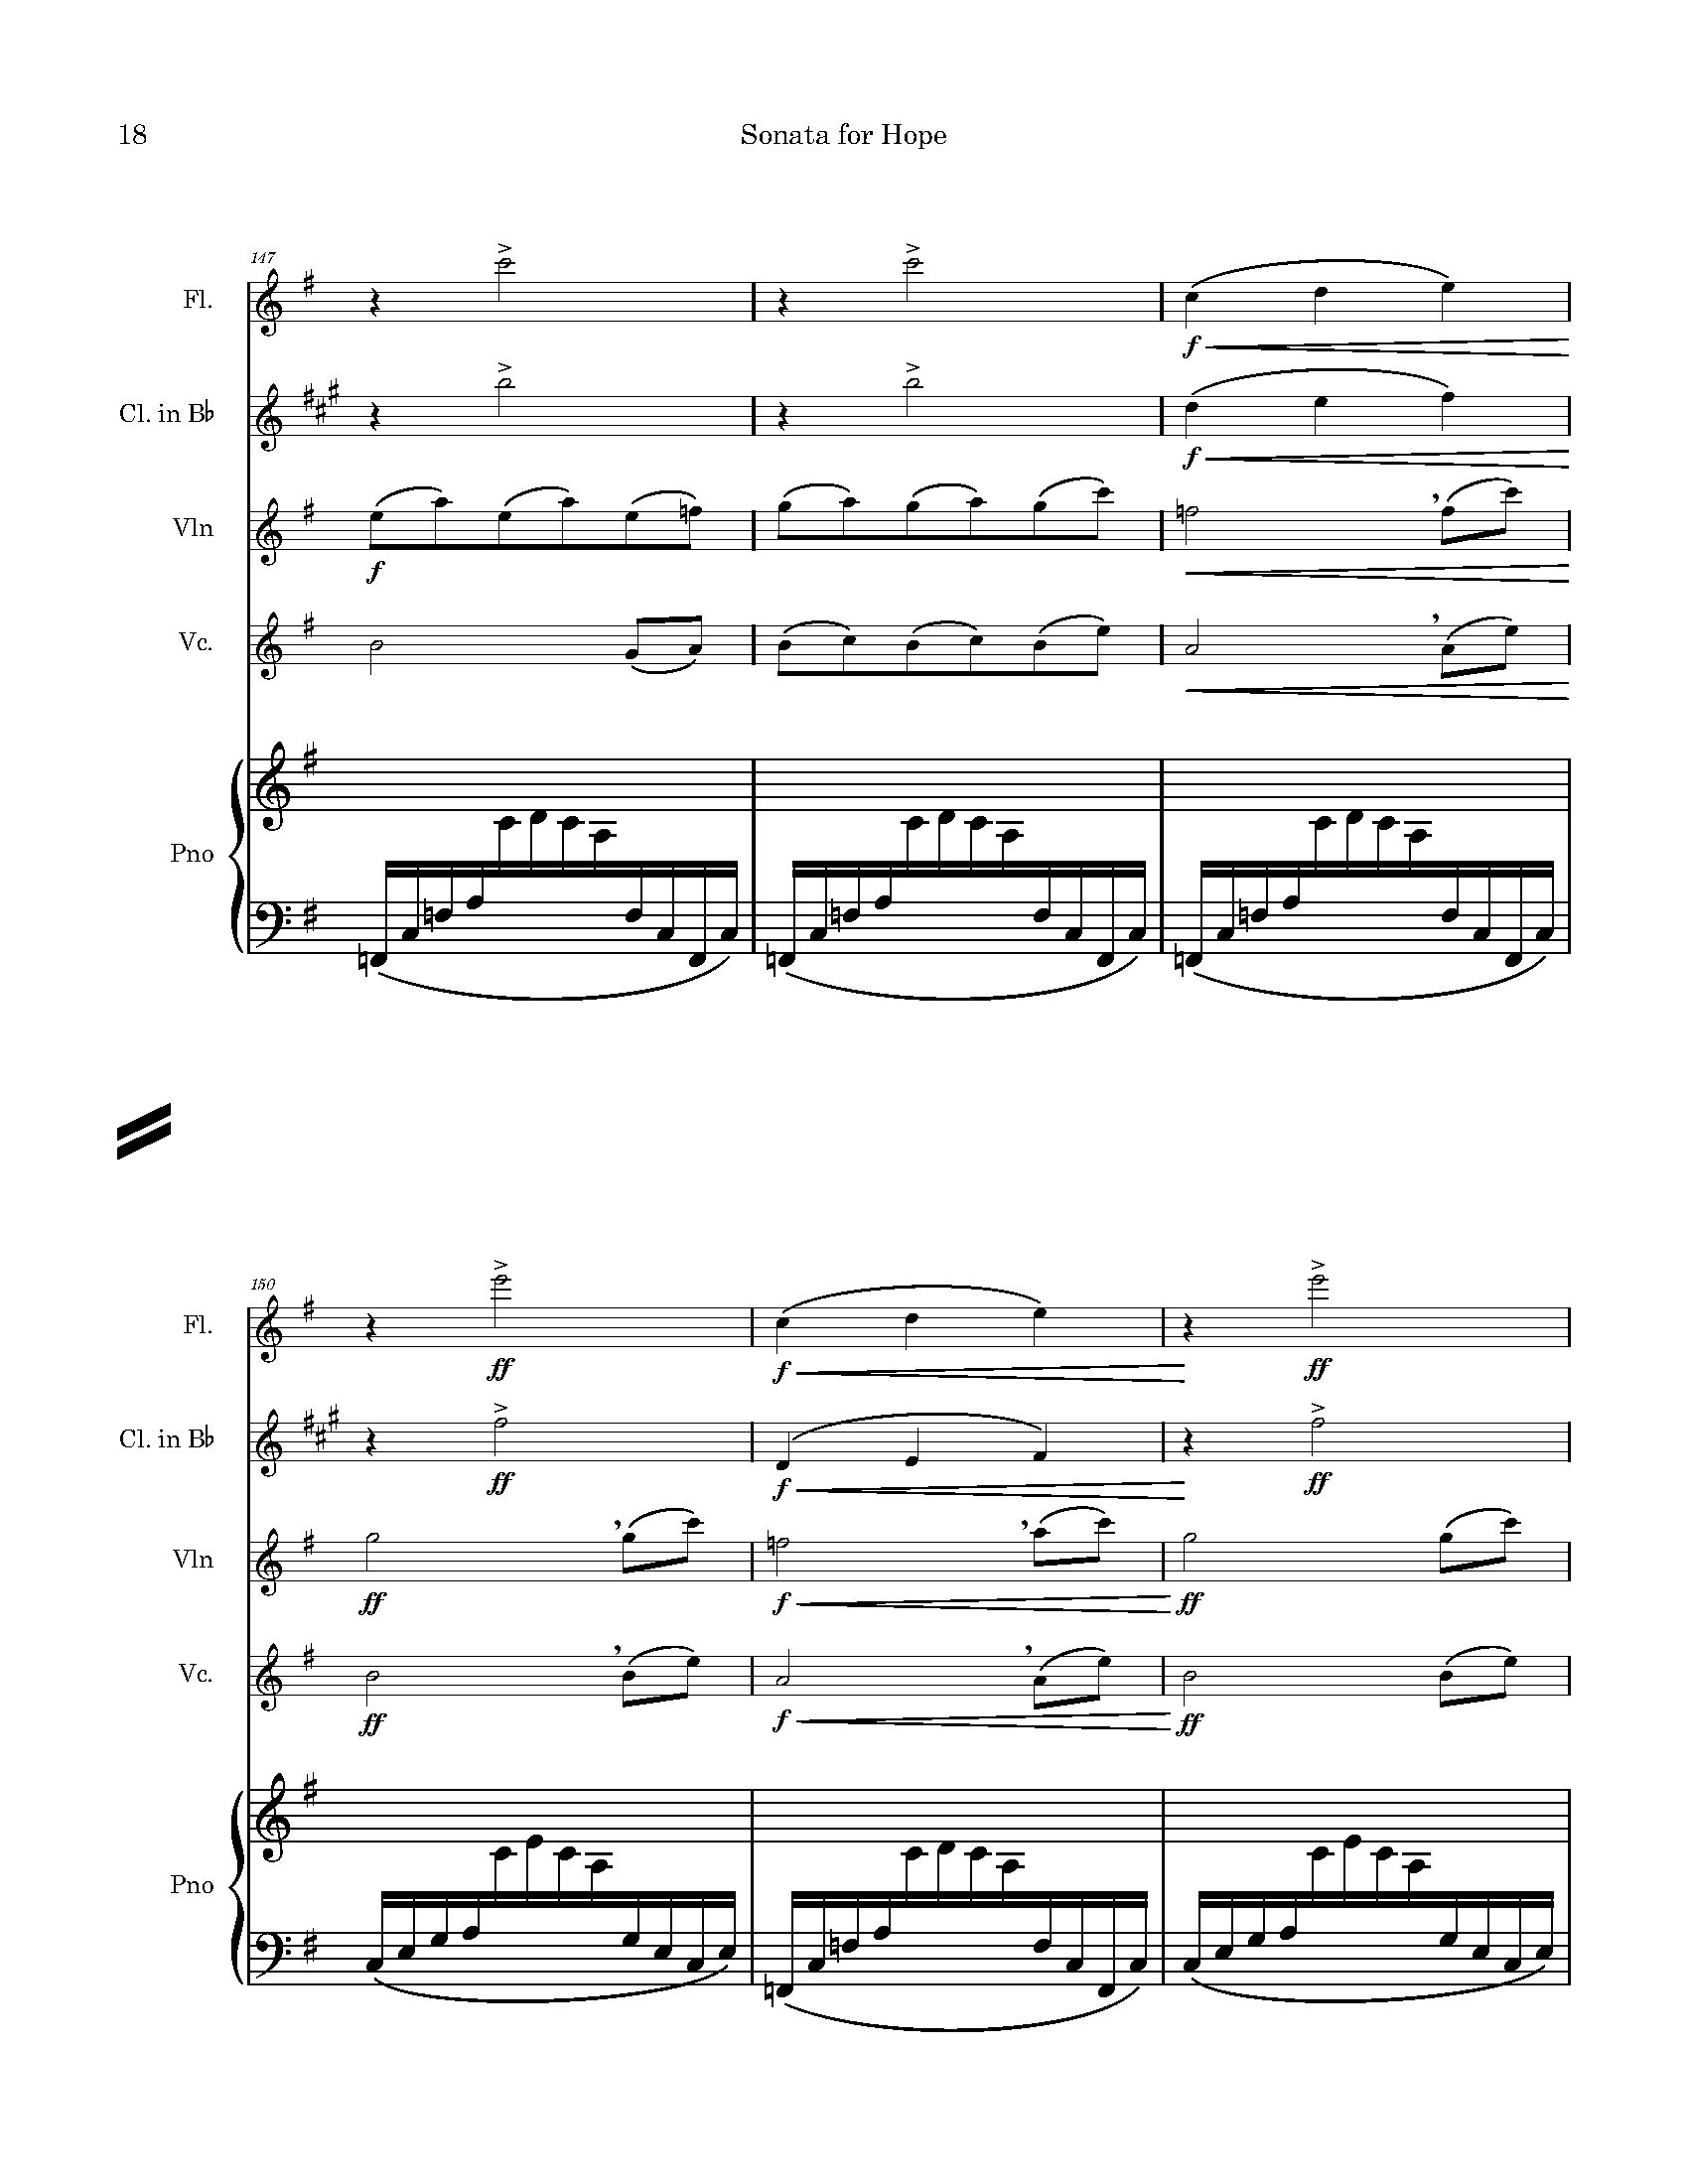 Sonata for Hope - Piano Score_Page_18.jpg